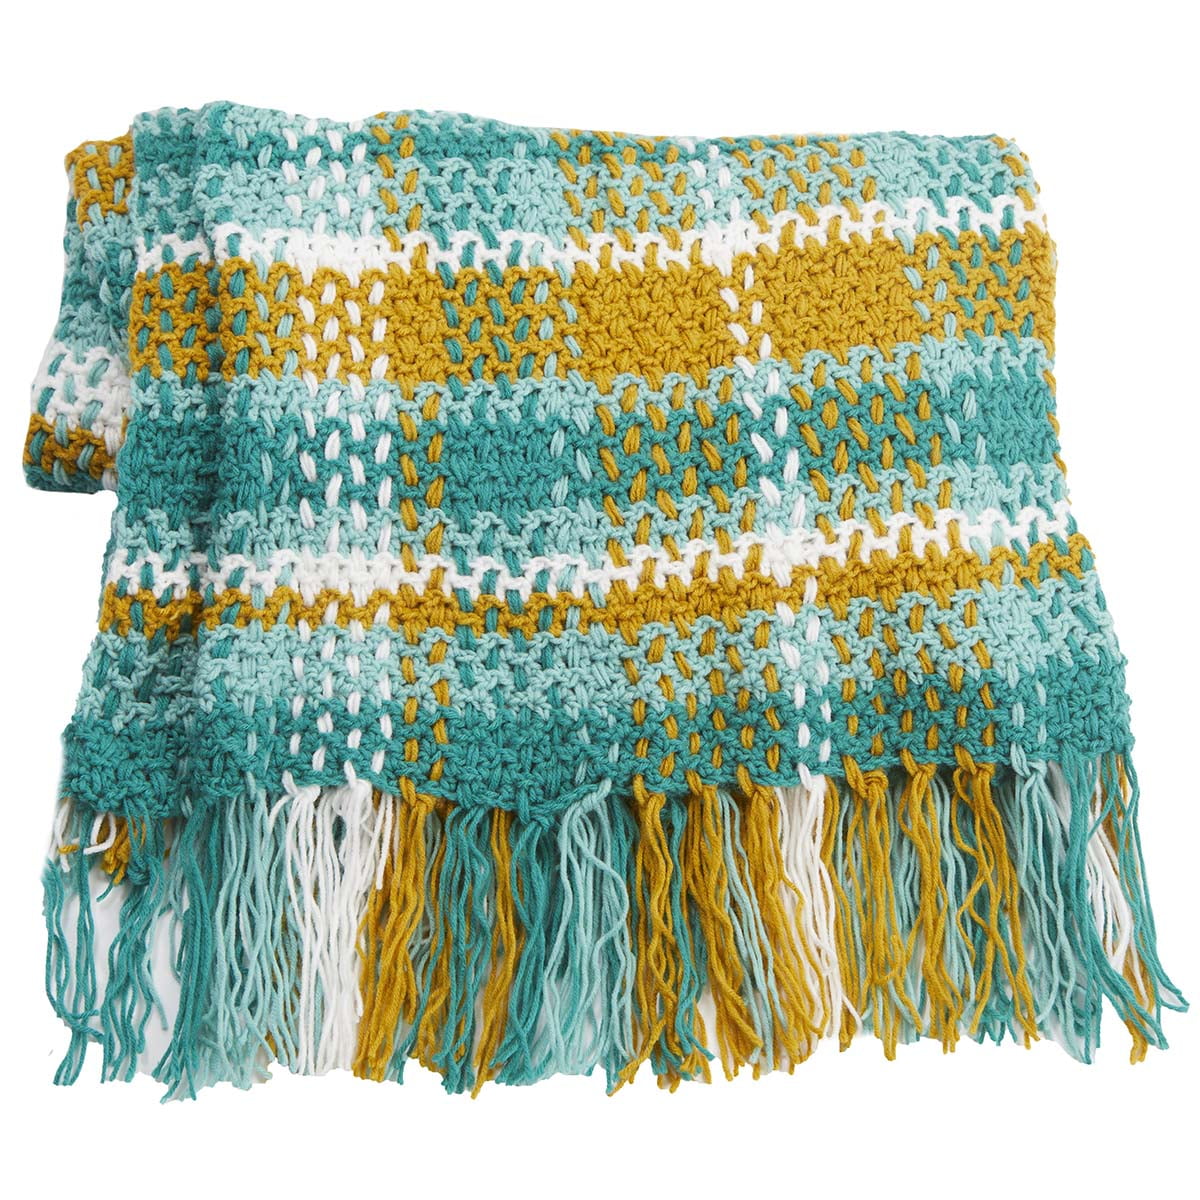 Herrschners Sienna Ripple Afghan Crochet Kit